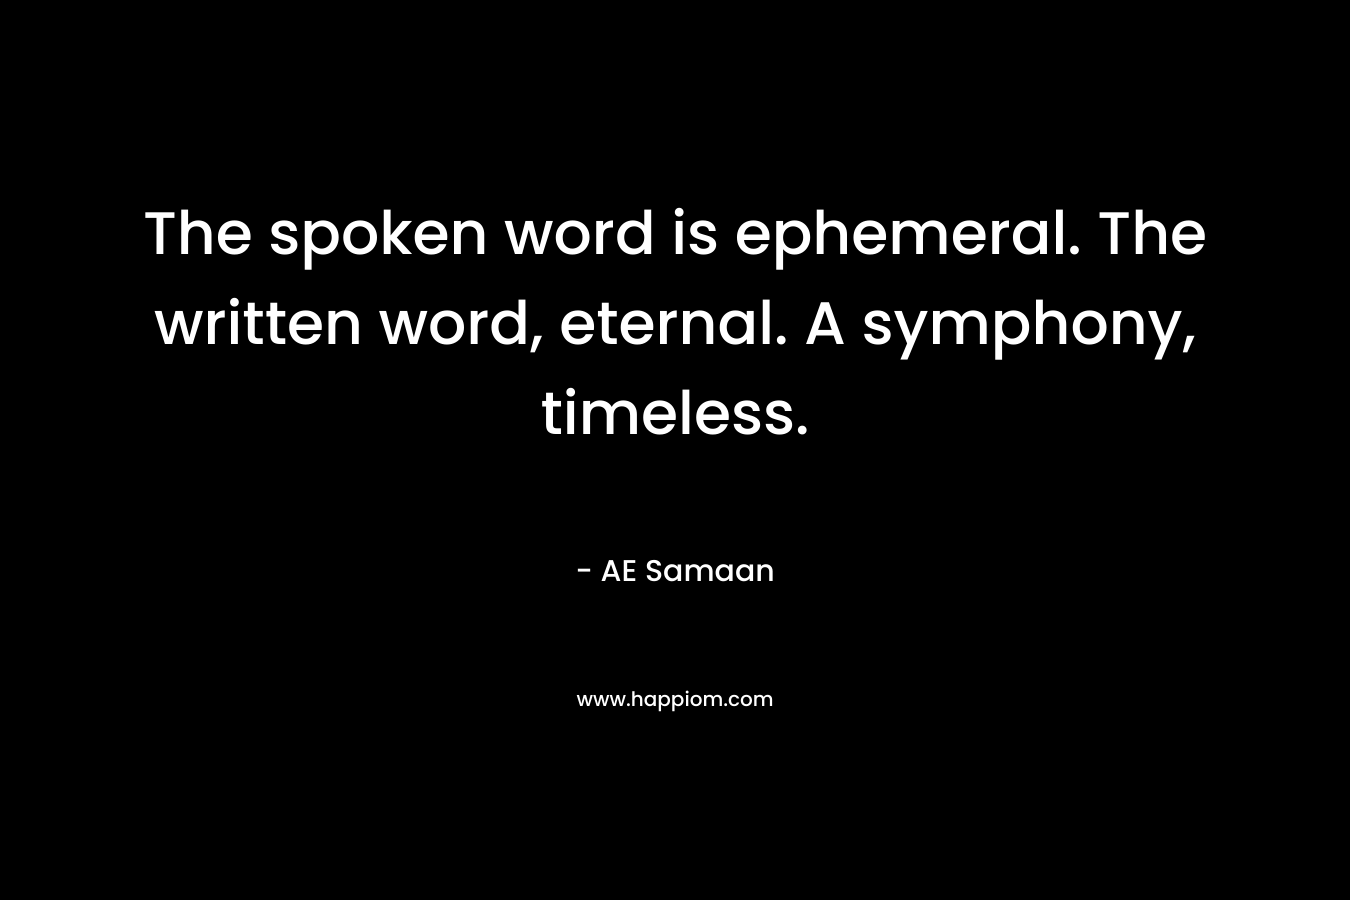 The spoken word is ephemeral. The written word, eternal. A symphony, timeless.